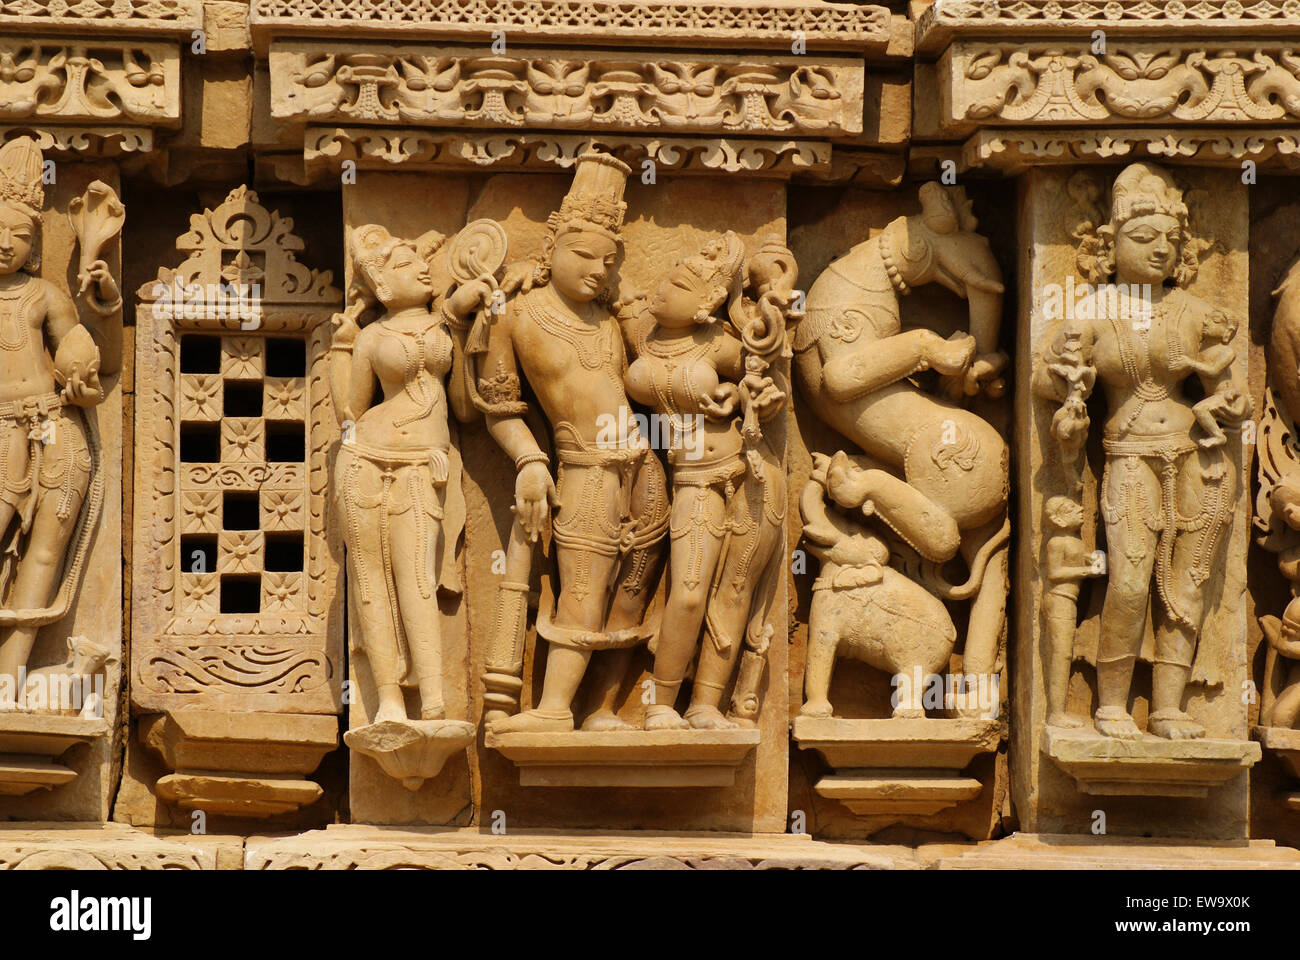 Romance and love Historic Kama Sutra Statue arts in Khajuraho Temple Walls at Madhya Pradesh India Stock Photo